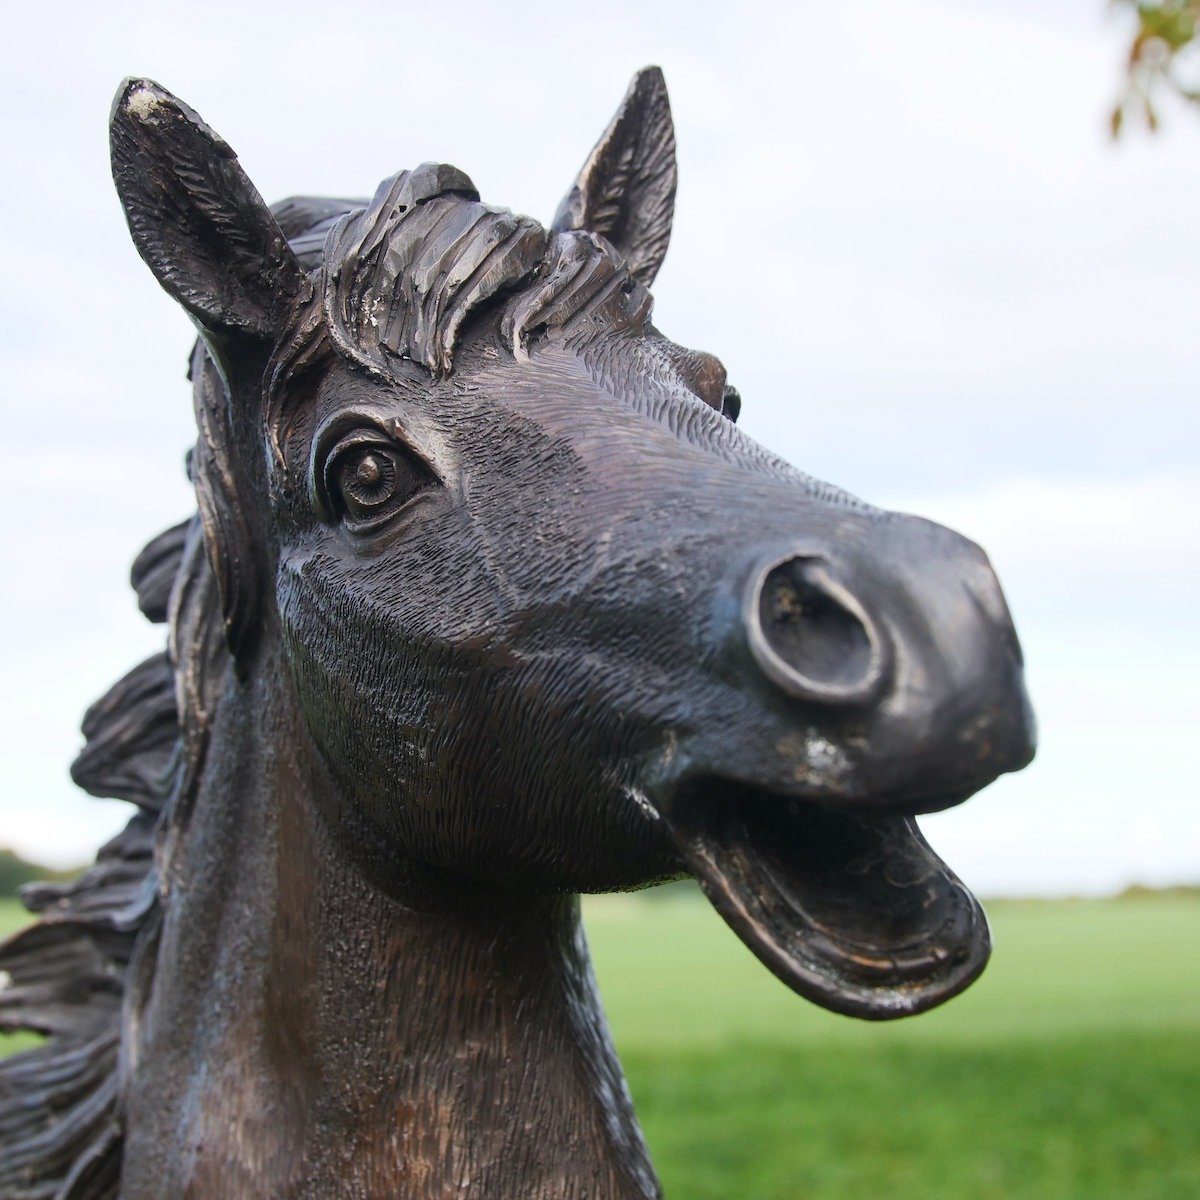 bronZartes Gartenfigur "Springendes Pferd" Bronzeskulptur